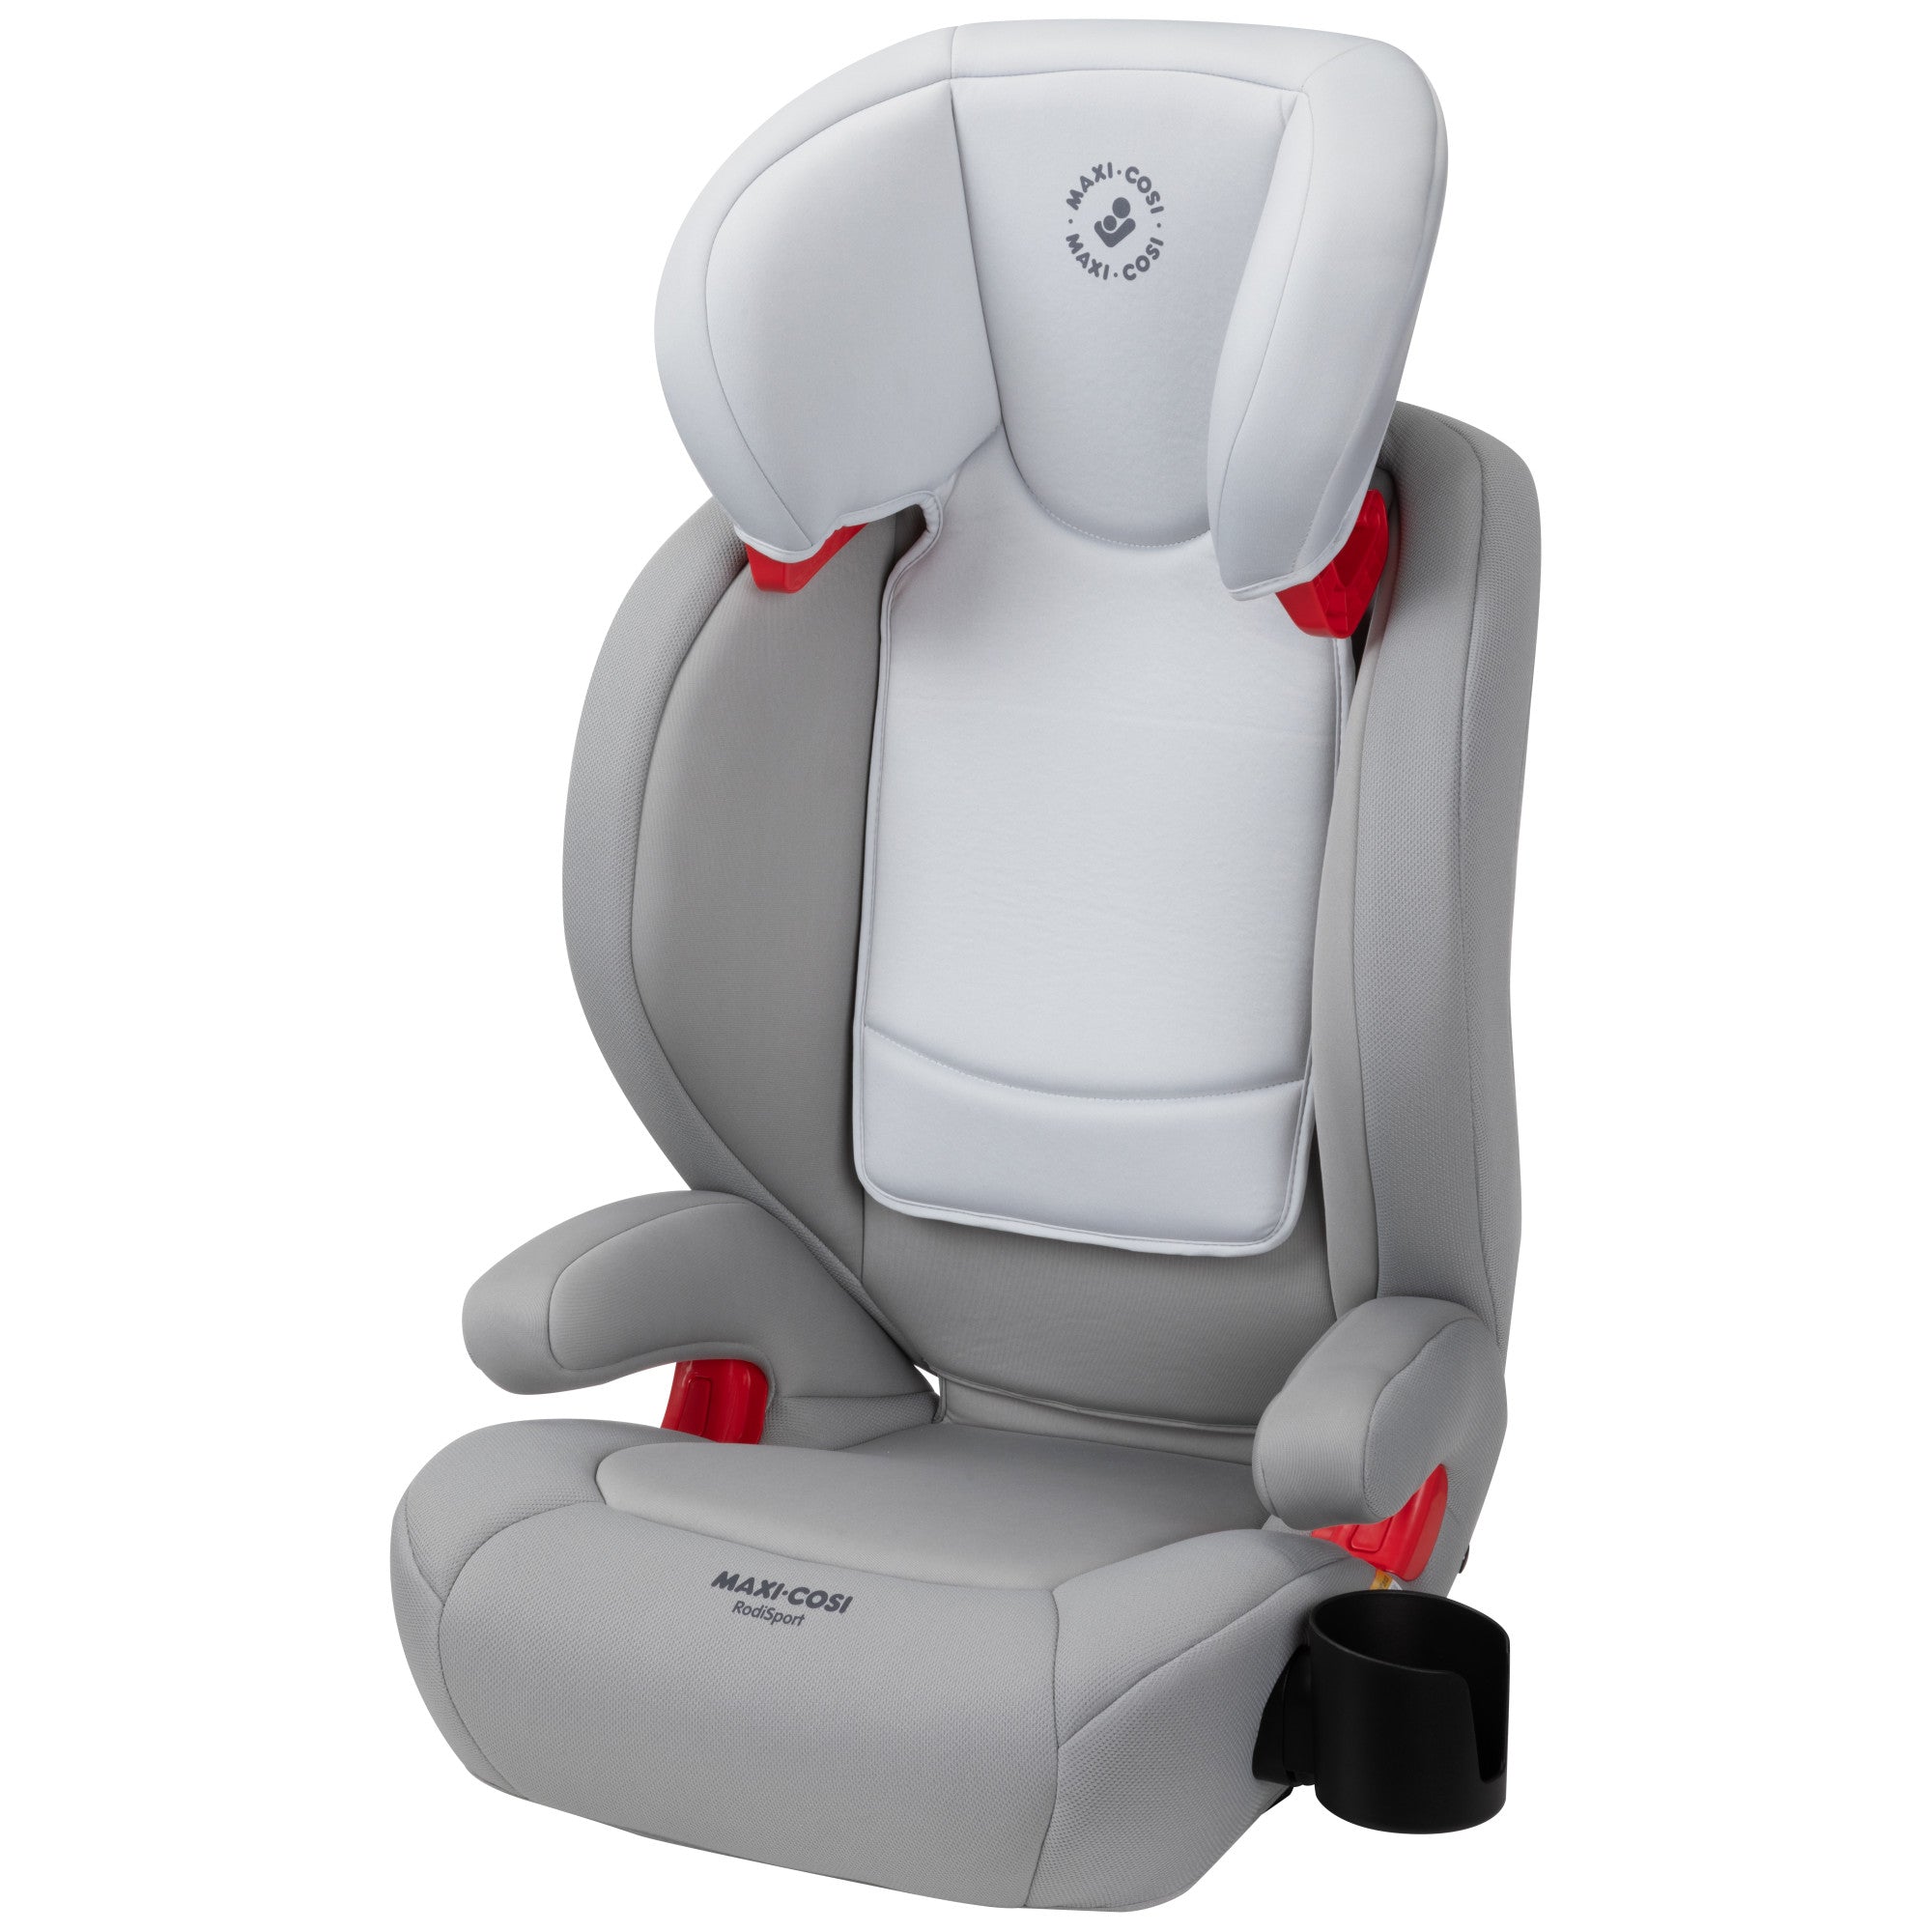 Maxi-Cosi RodiSport grey car seat front view